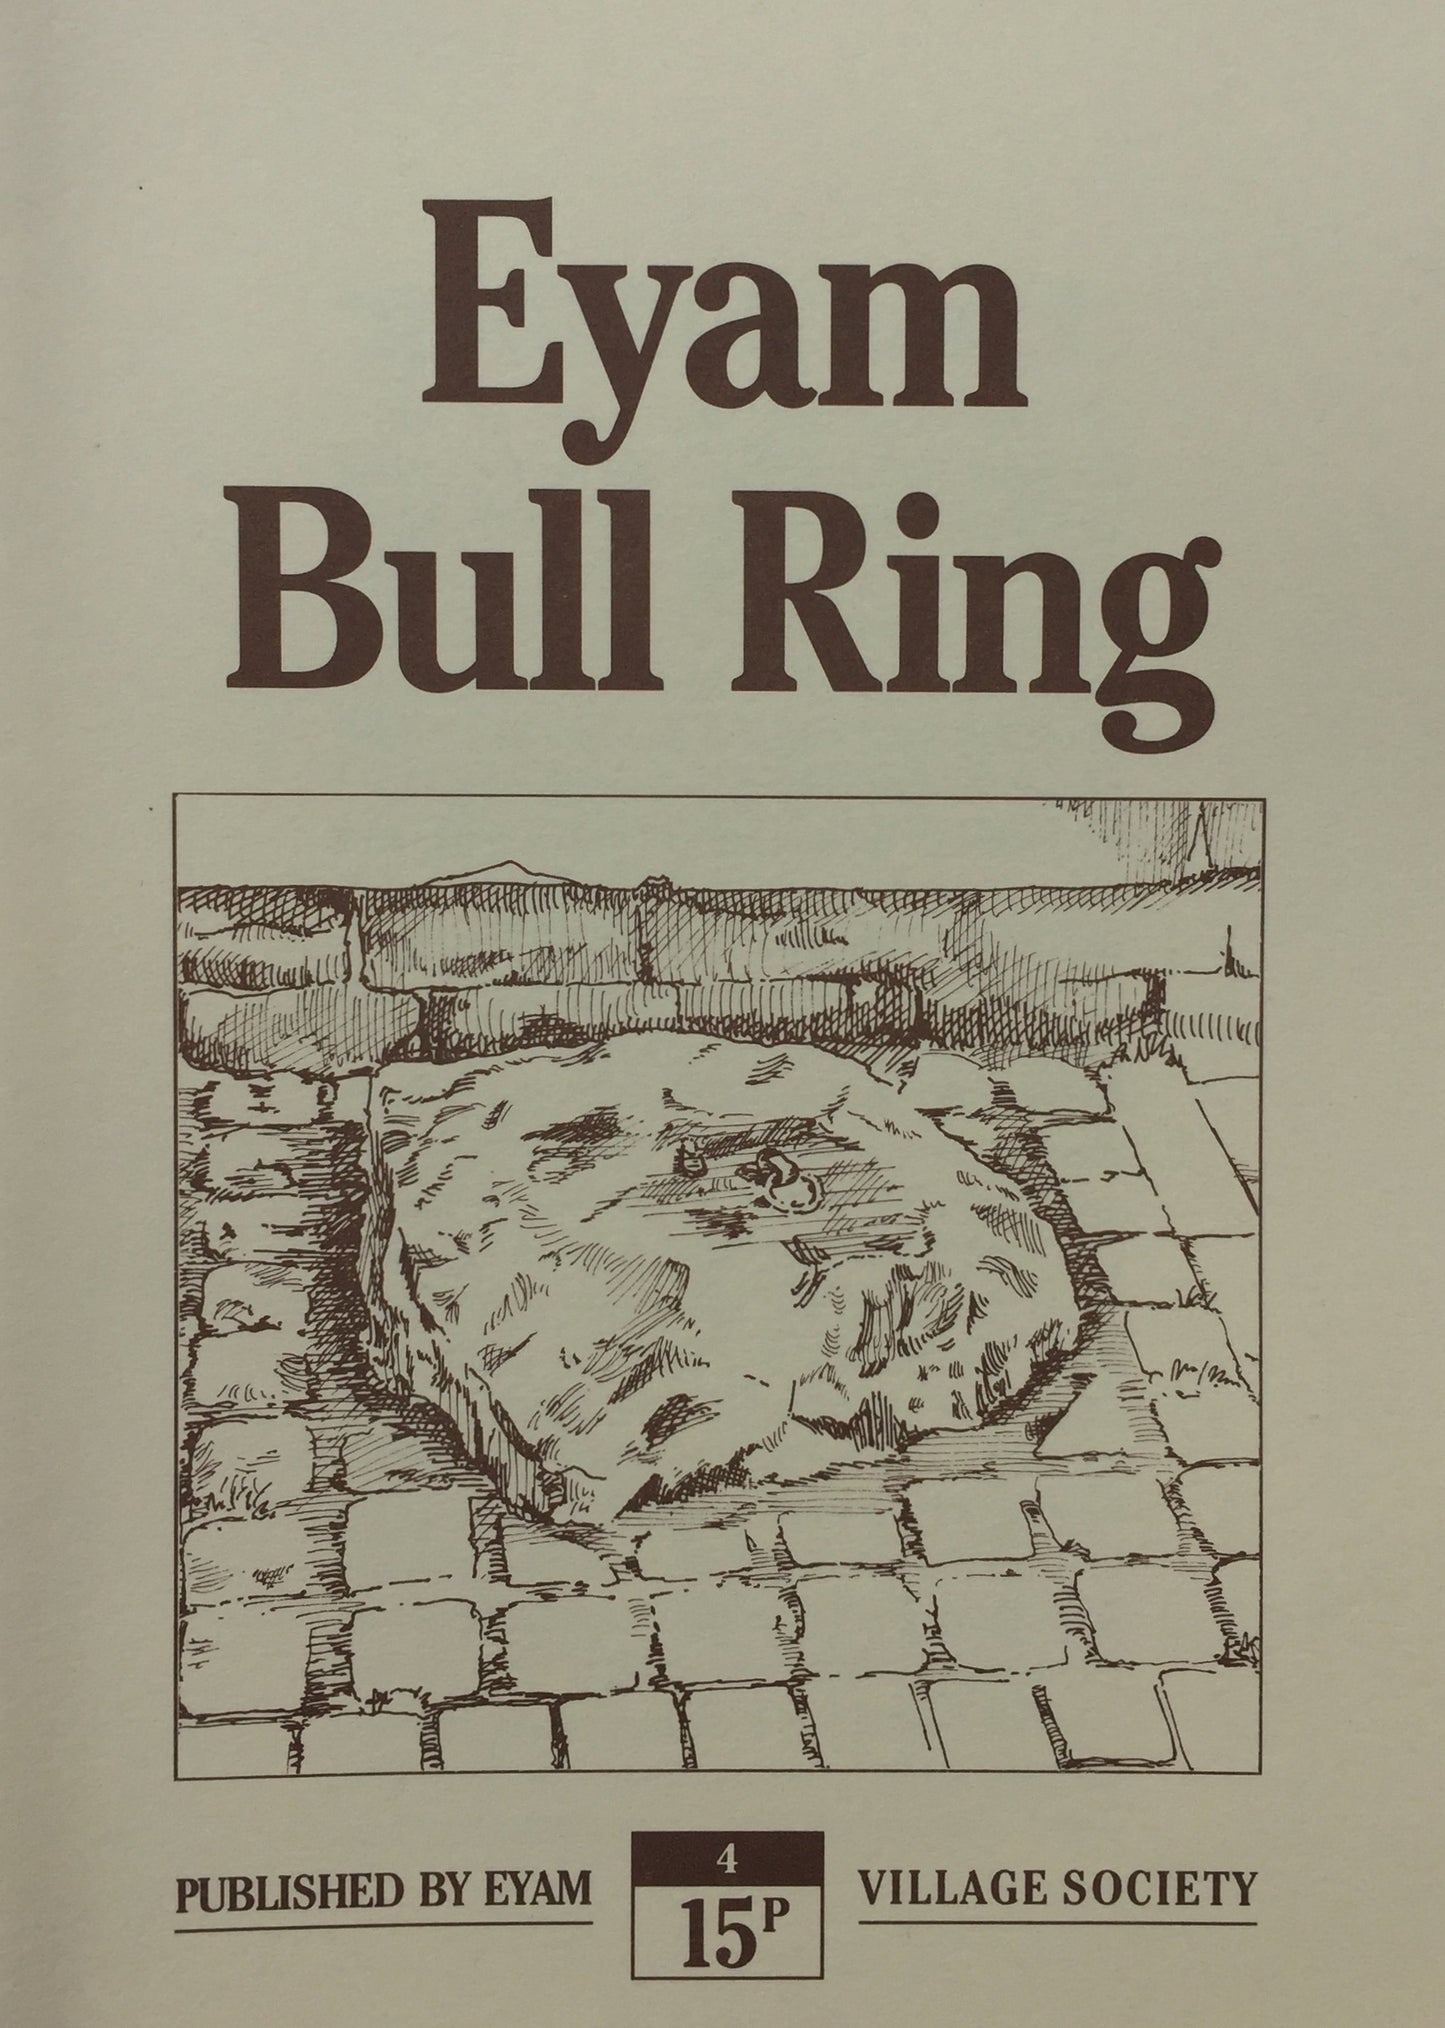 Eyam Bull Ring